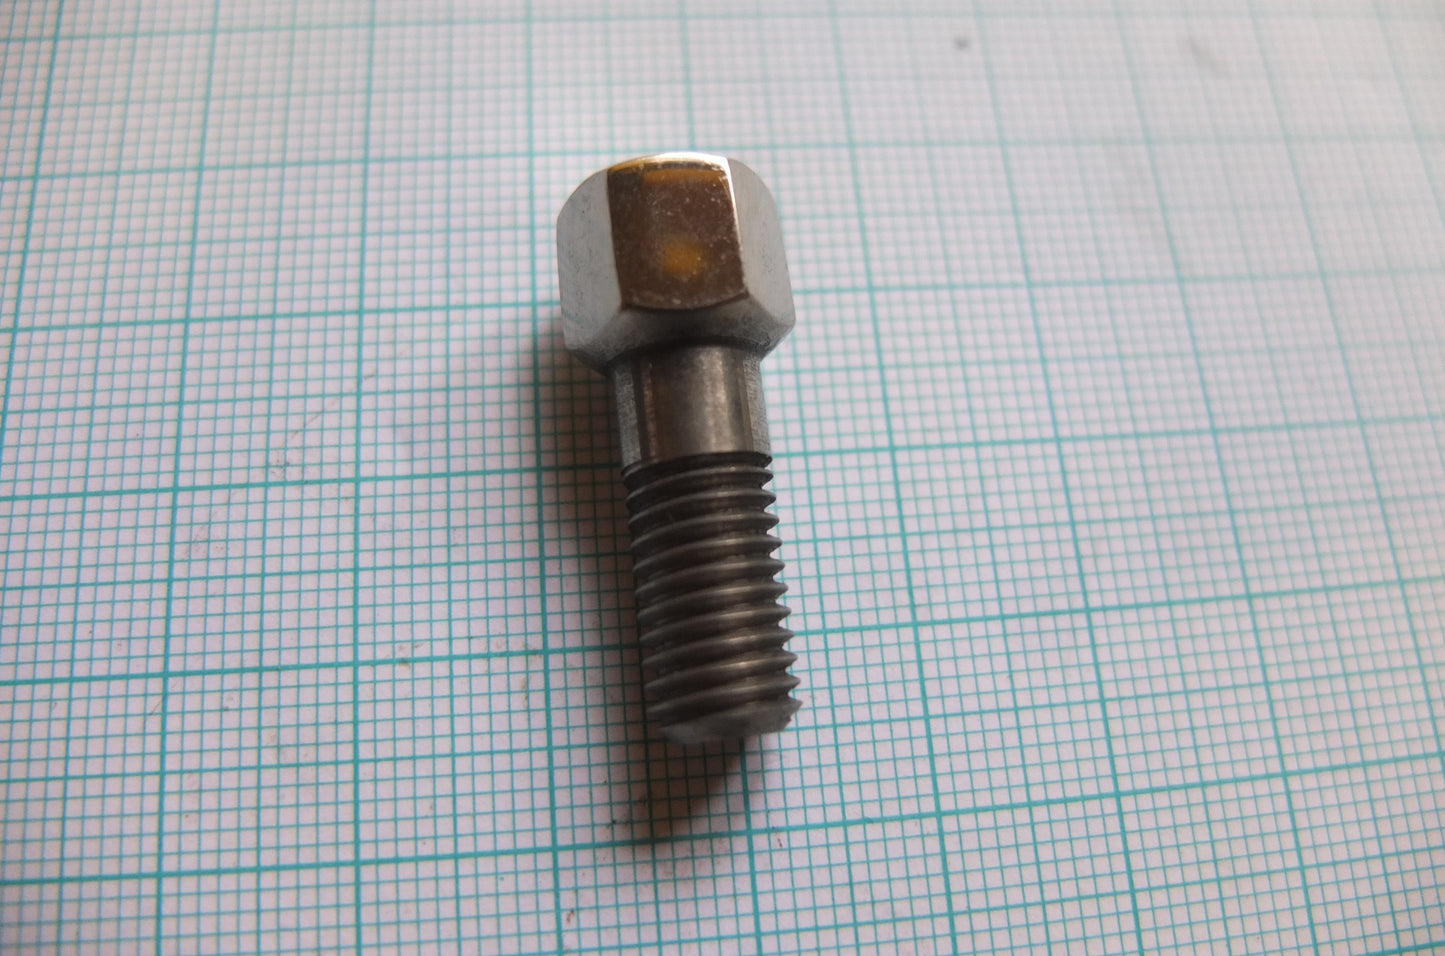 P13/017 Early S7 handlebar bracket bolt